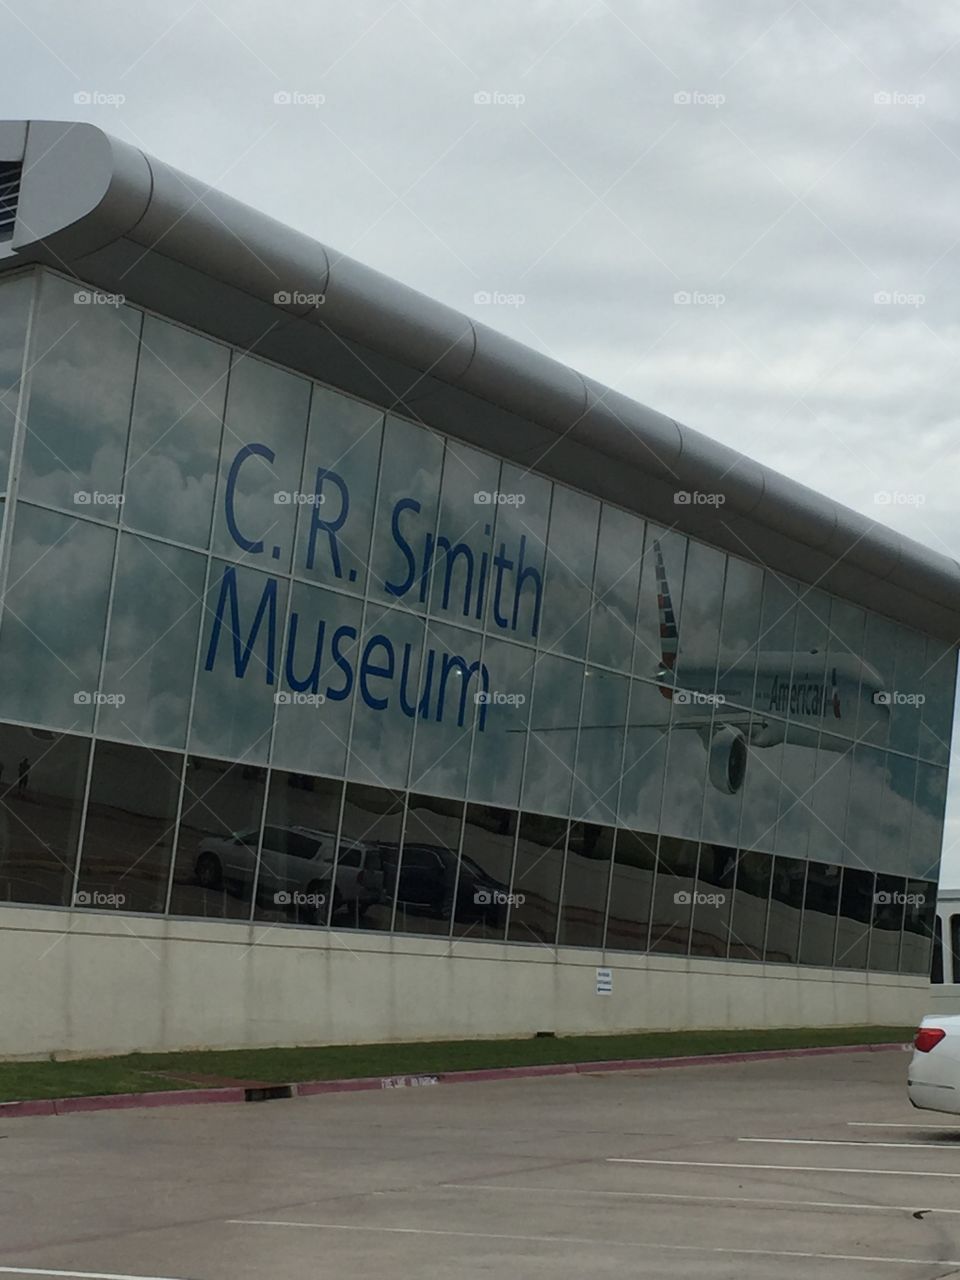 Aviation museum